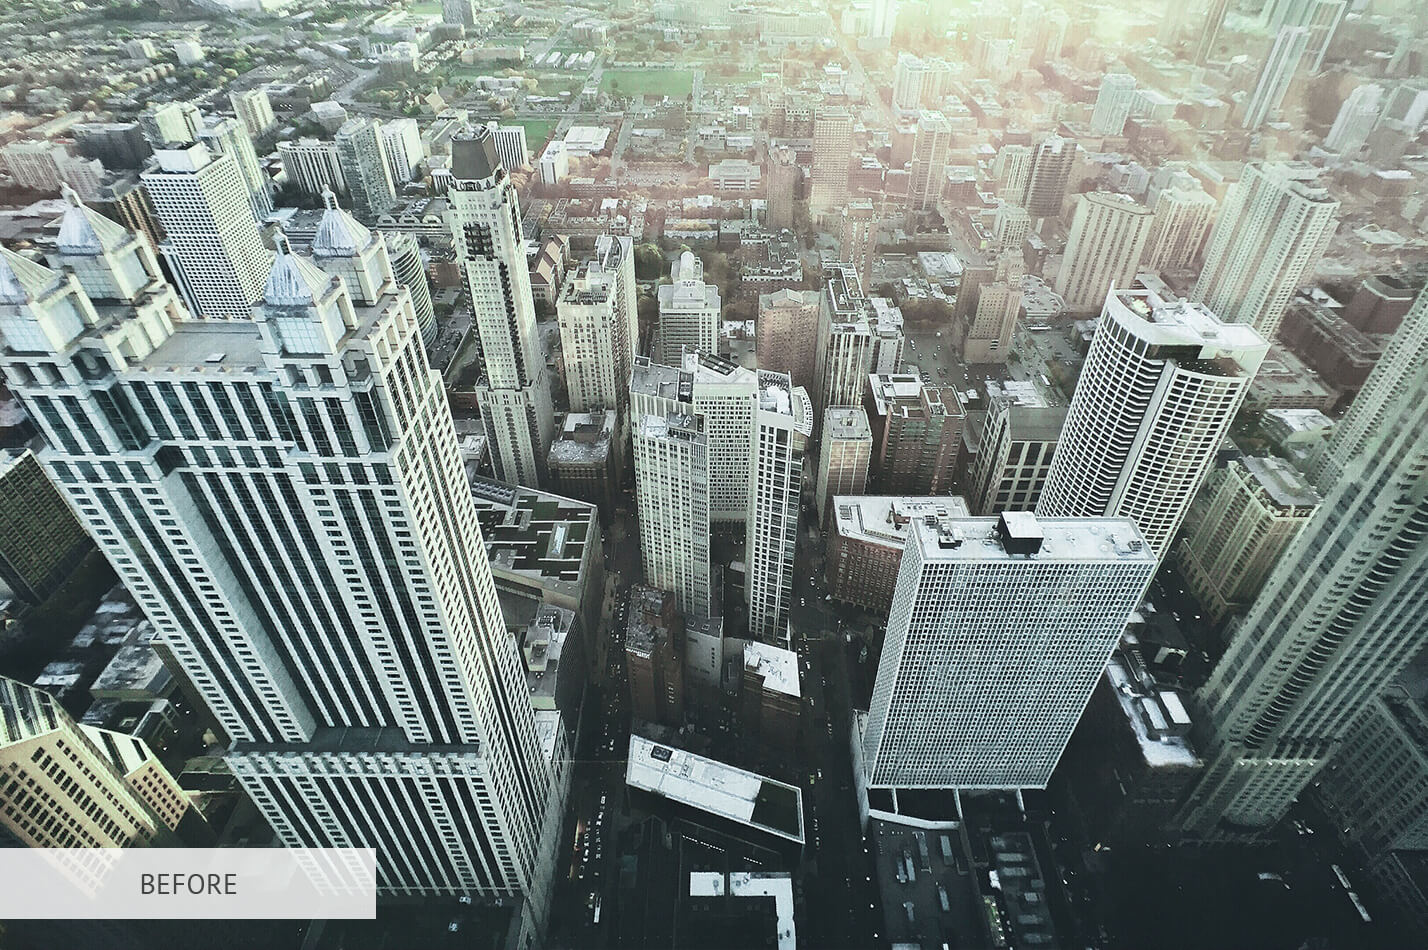 cities skylines all dlc mac download